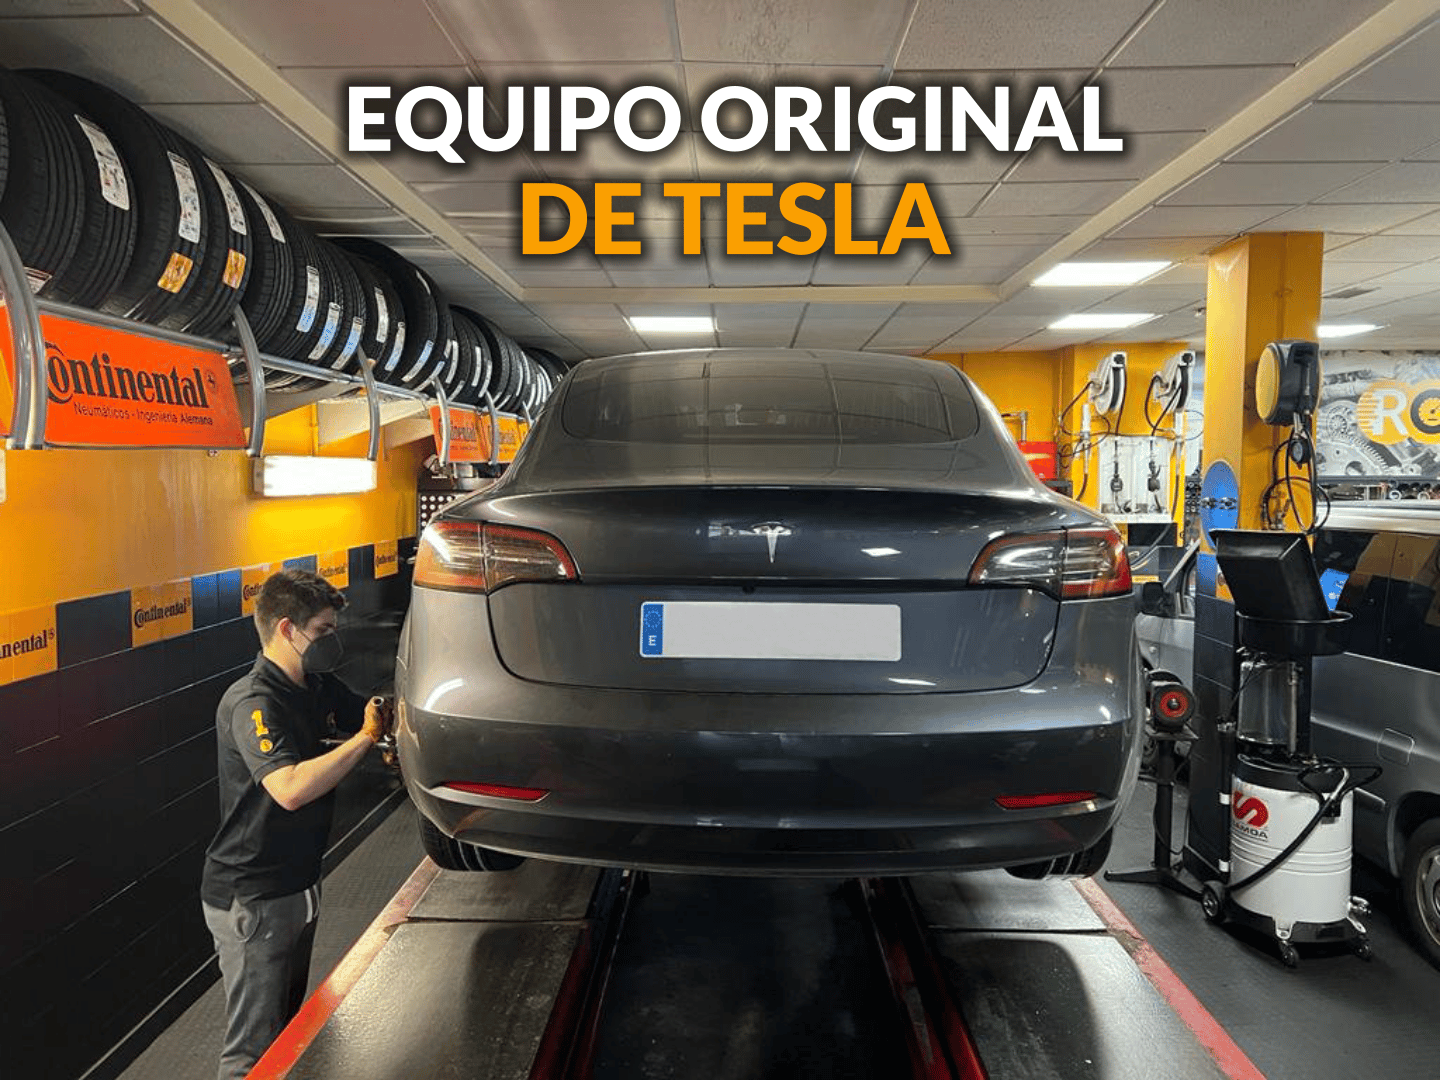 Conseguir Equipo original de Tesla en Vigo, Rodalco